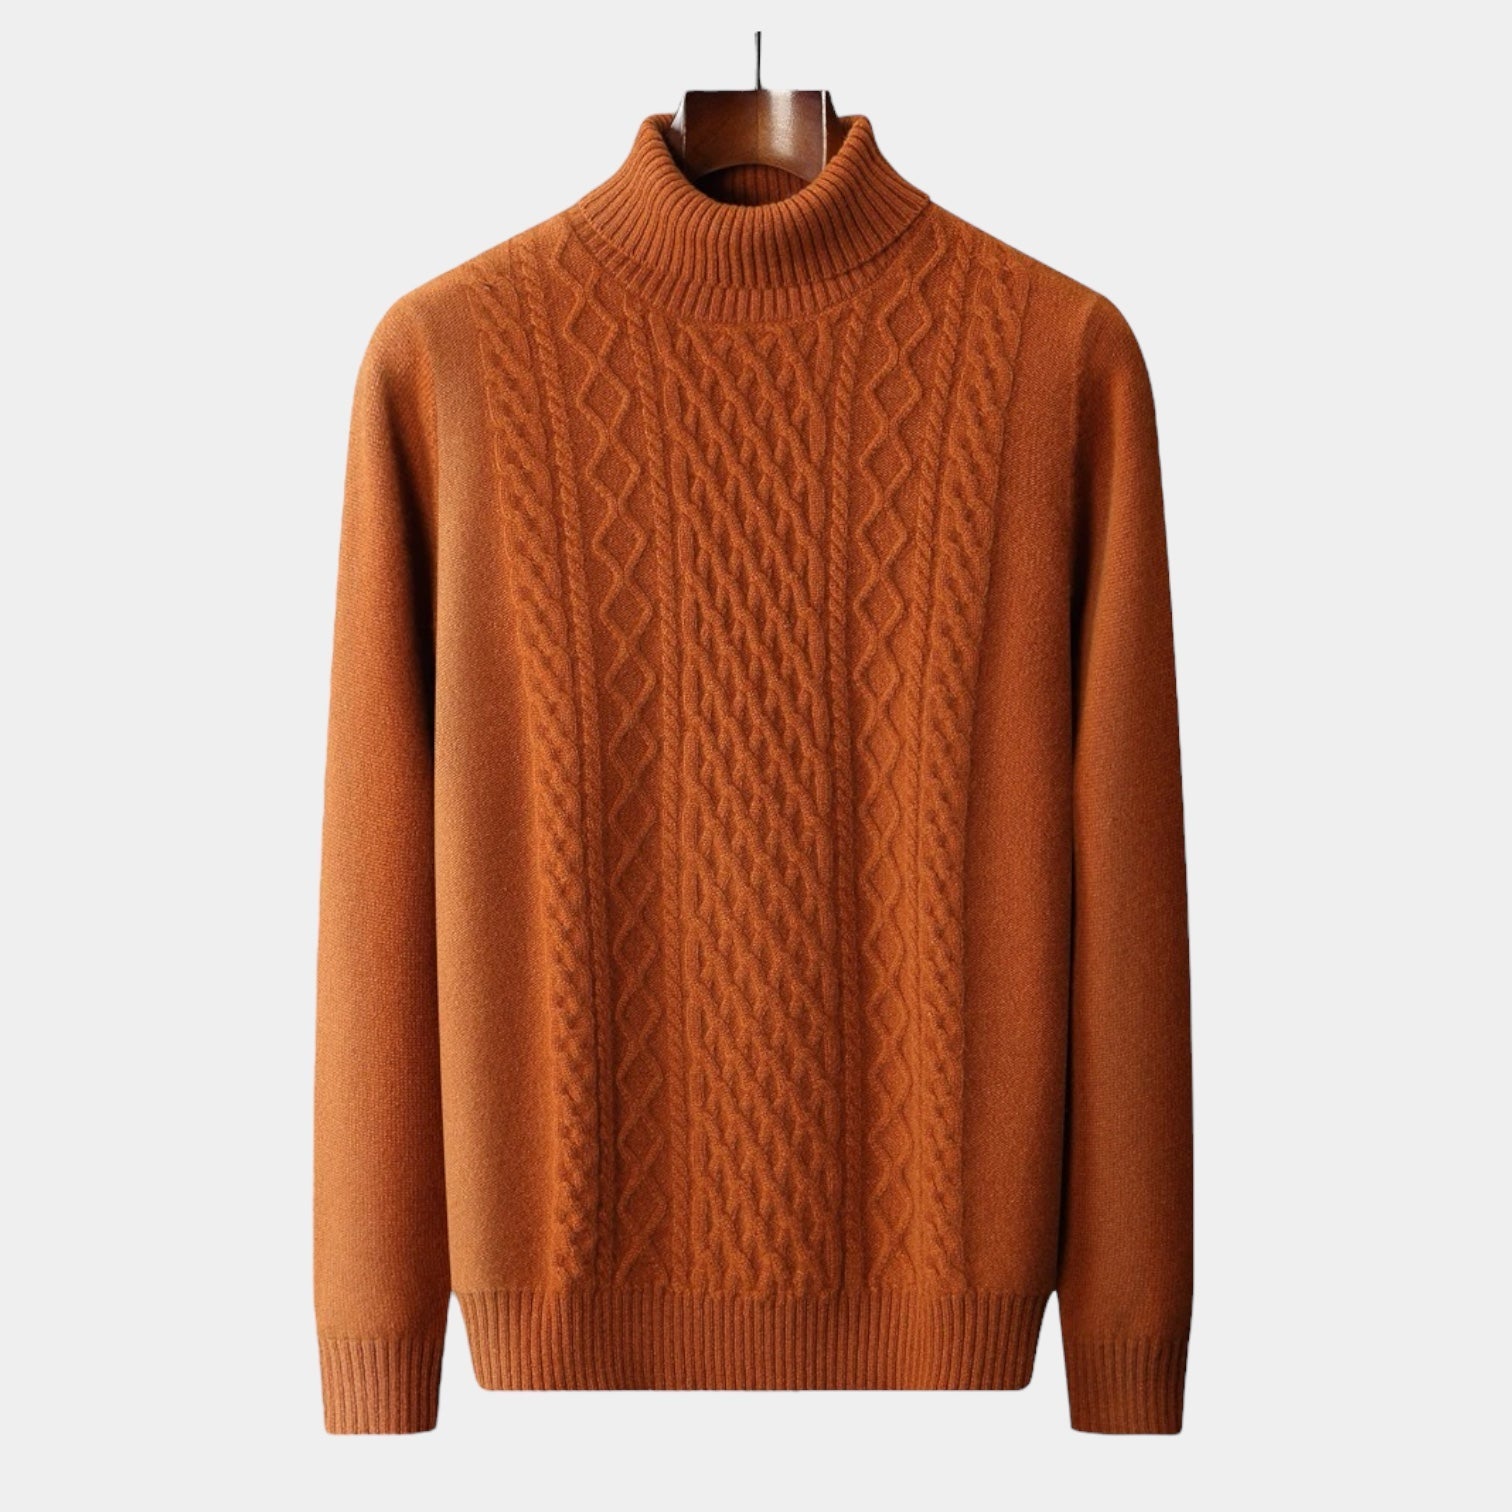 OLD MONEY Merino Wool Knitted Turtleneck Sweater